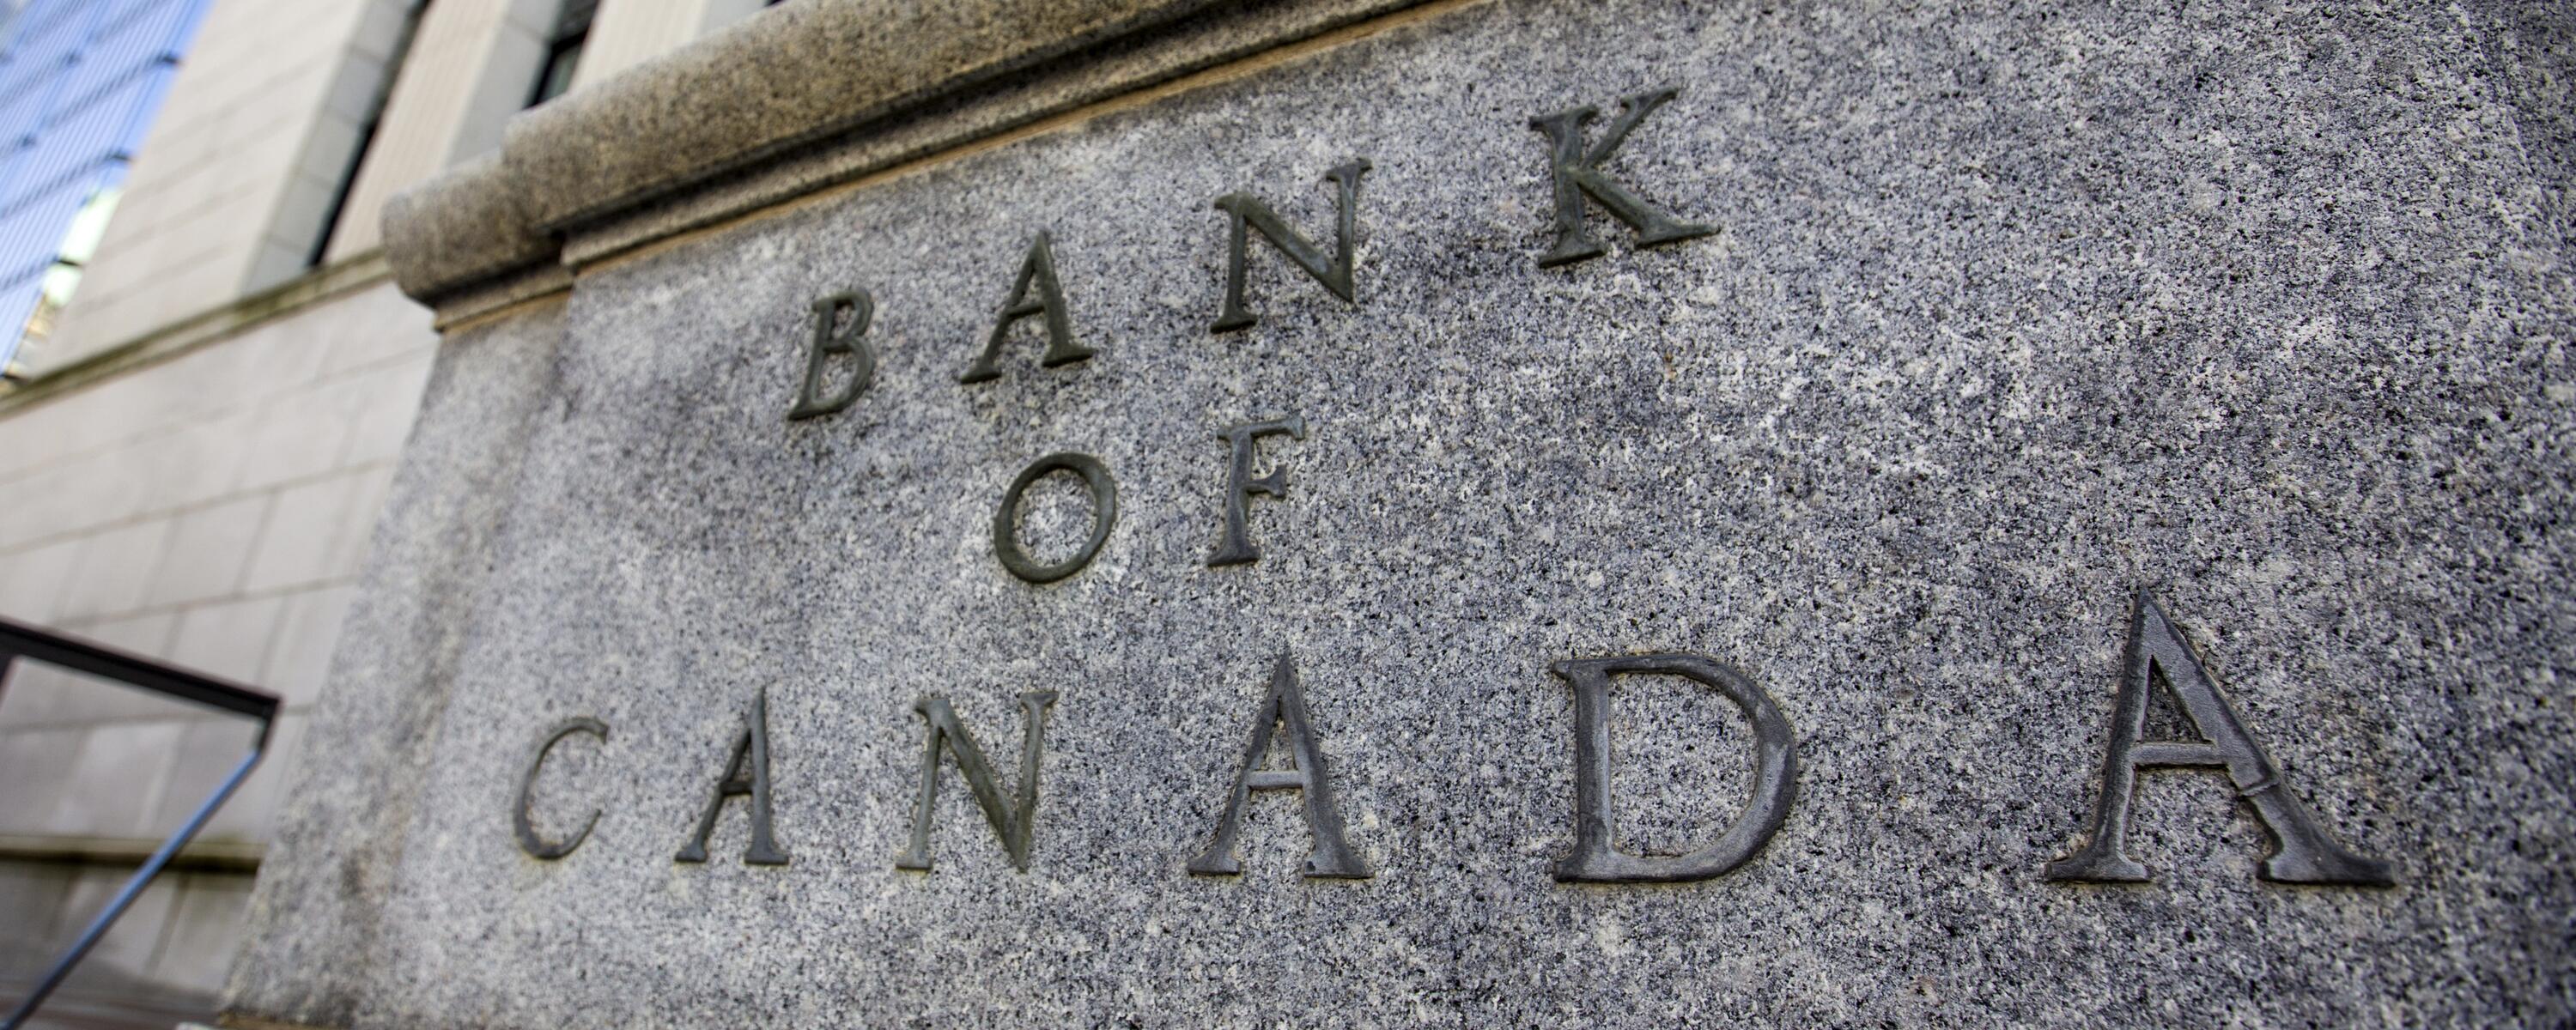 Bank of Canada ediface